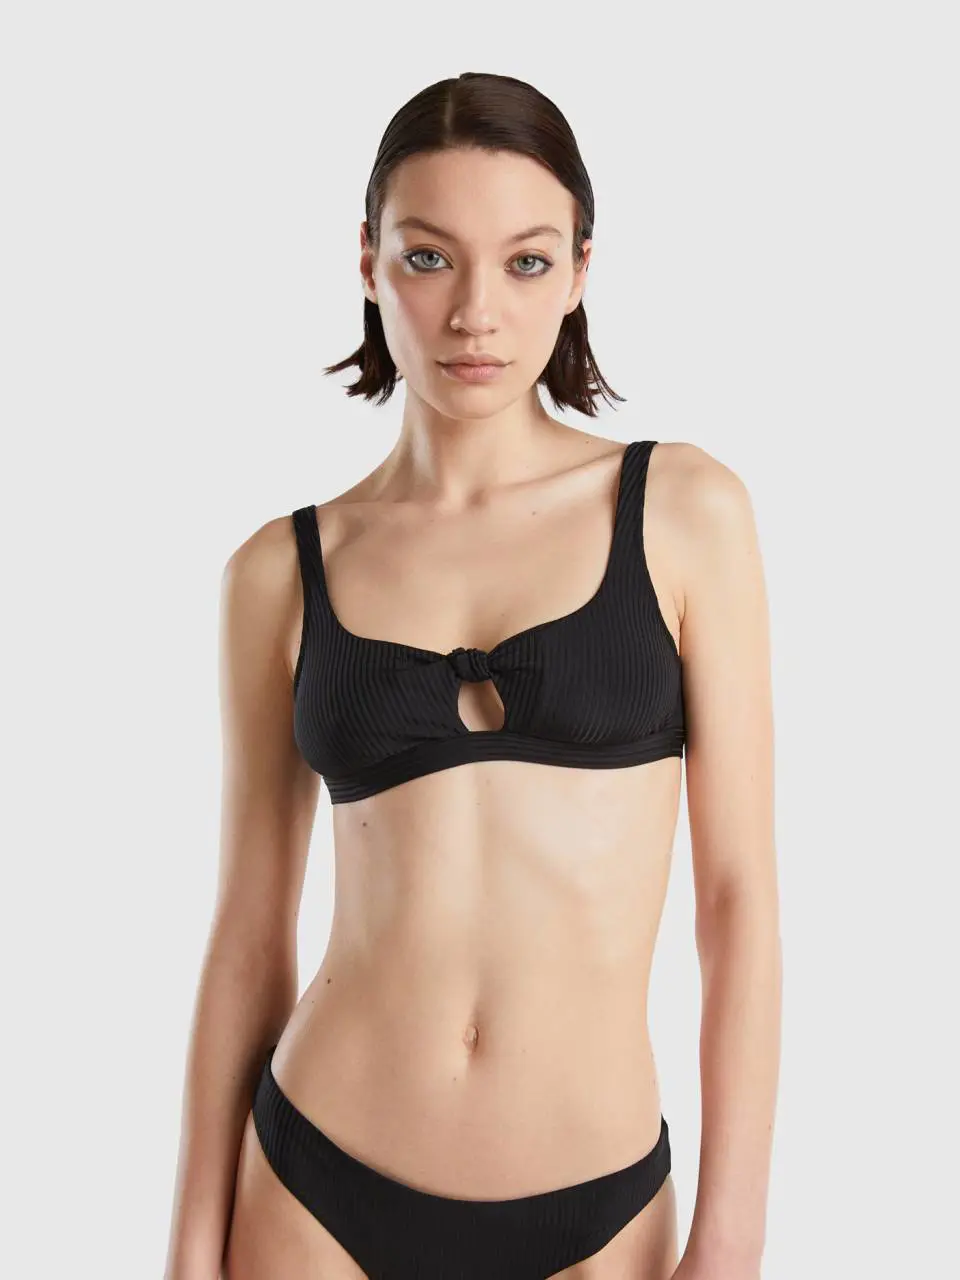 Benetton brassiere bikini top in recycled nylon. 1